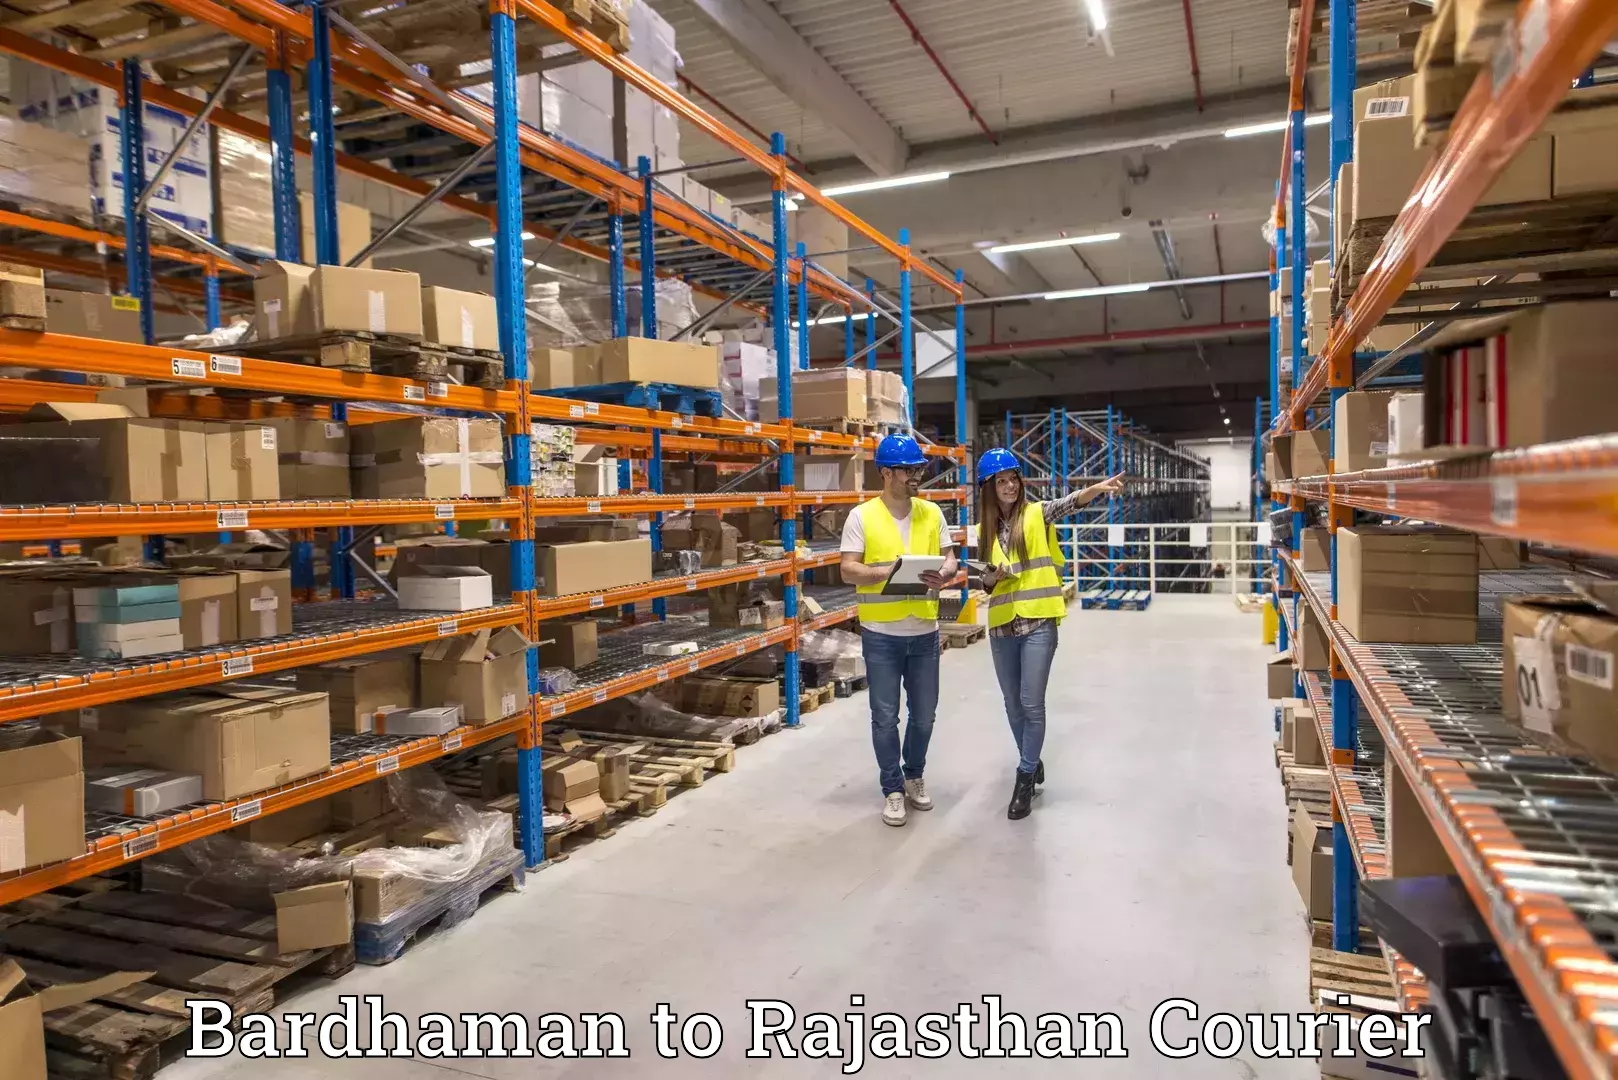 Courier service comparison Bardhaman to Lohawat